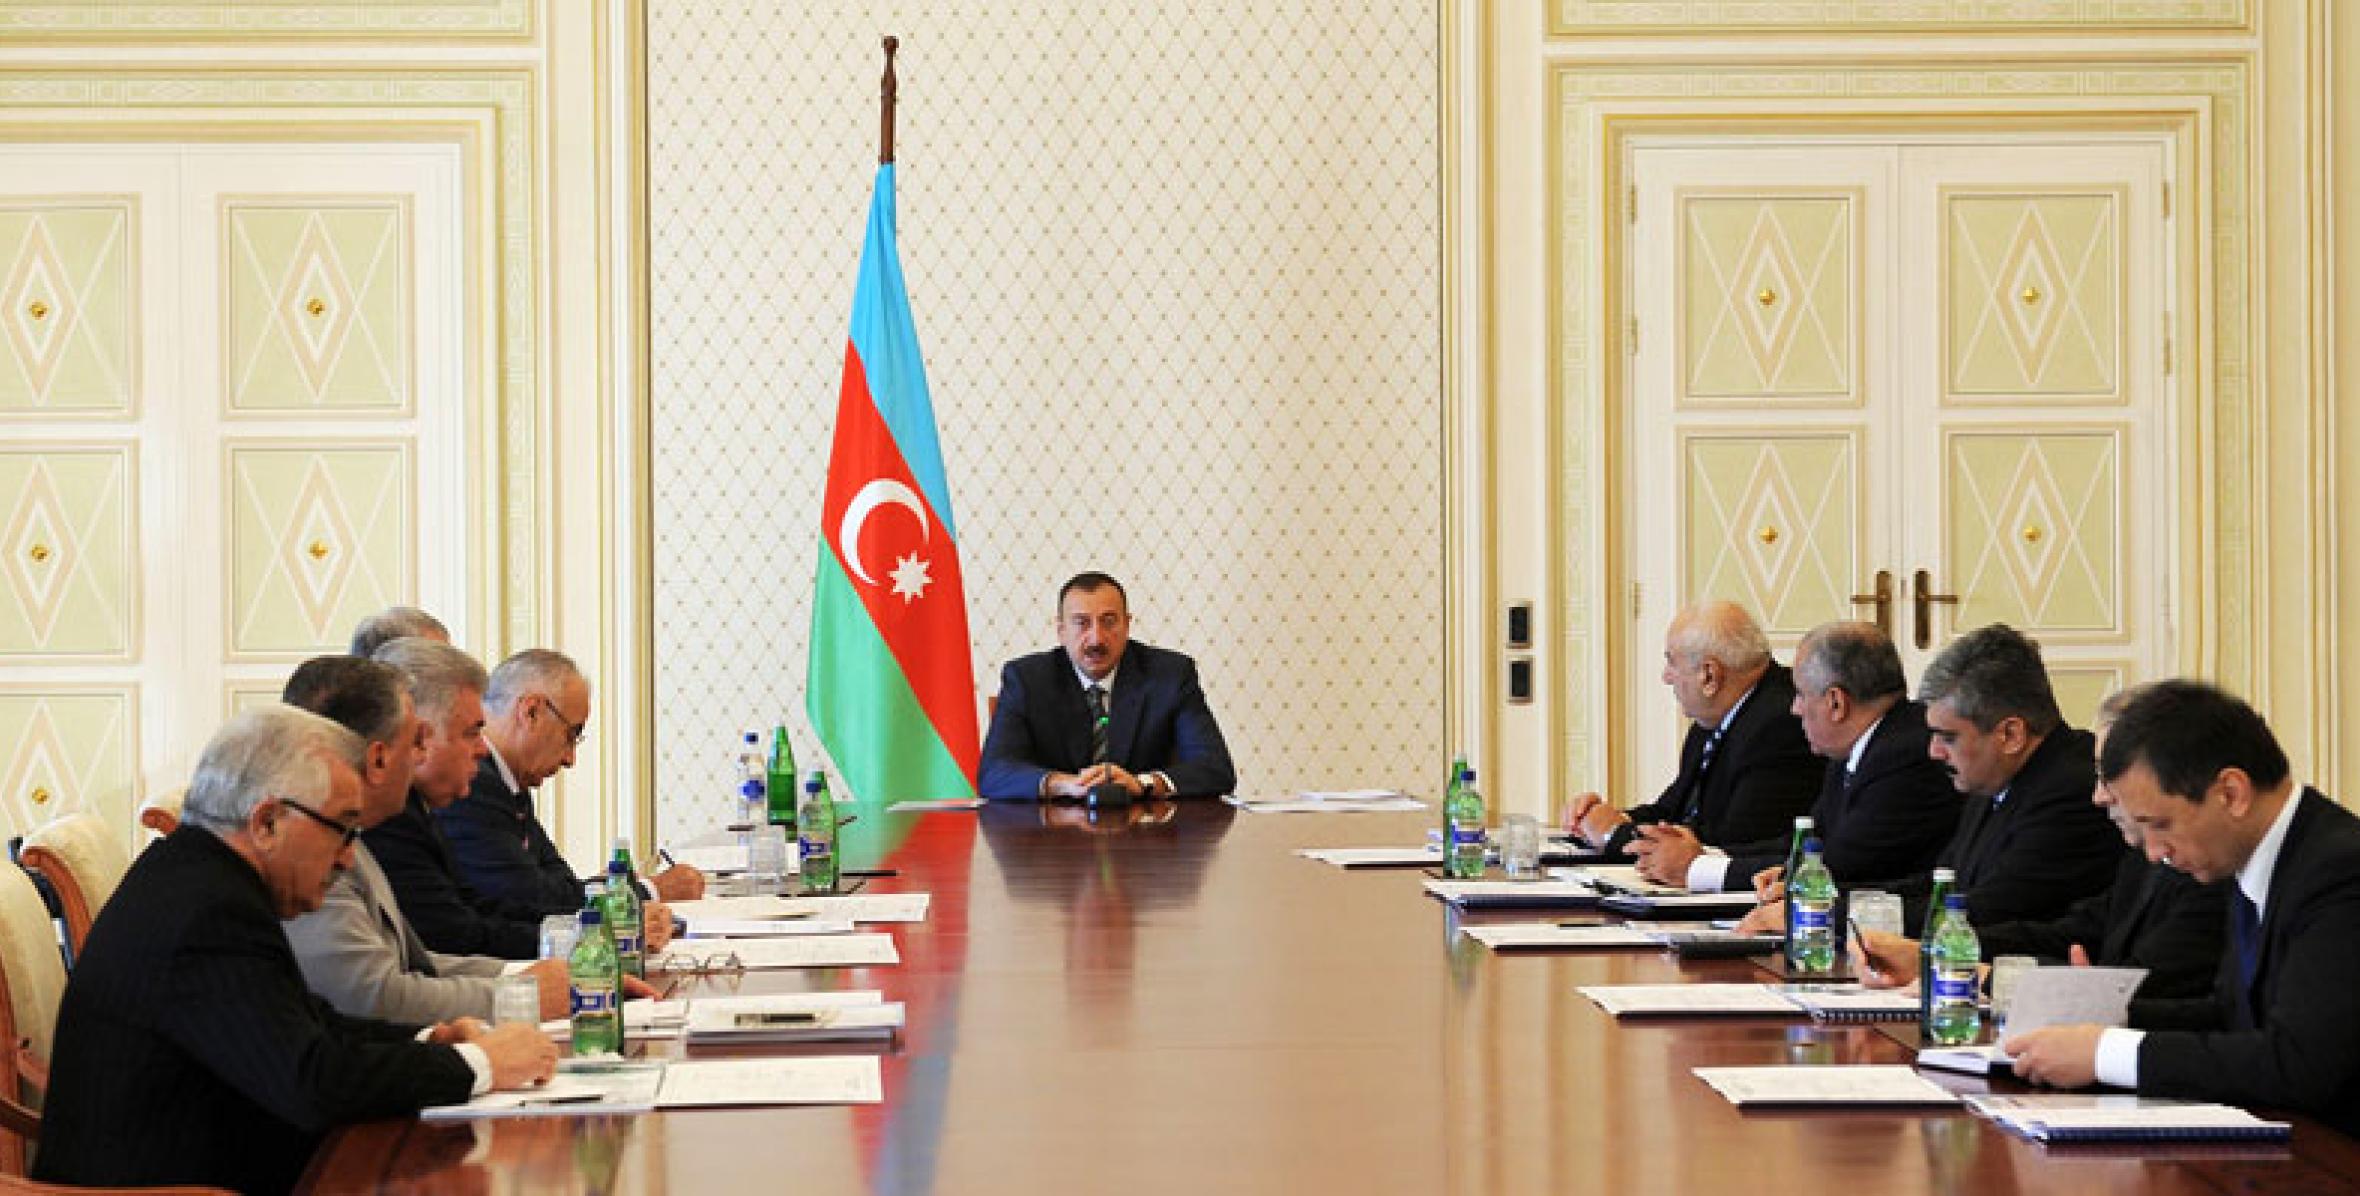 Ilham Aliyev chaired a meeting to discuss development plan of Baku Subway